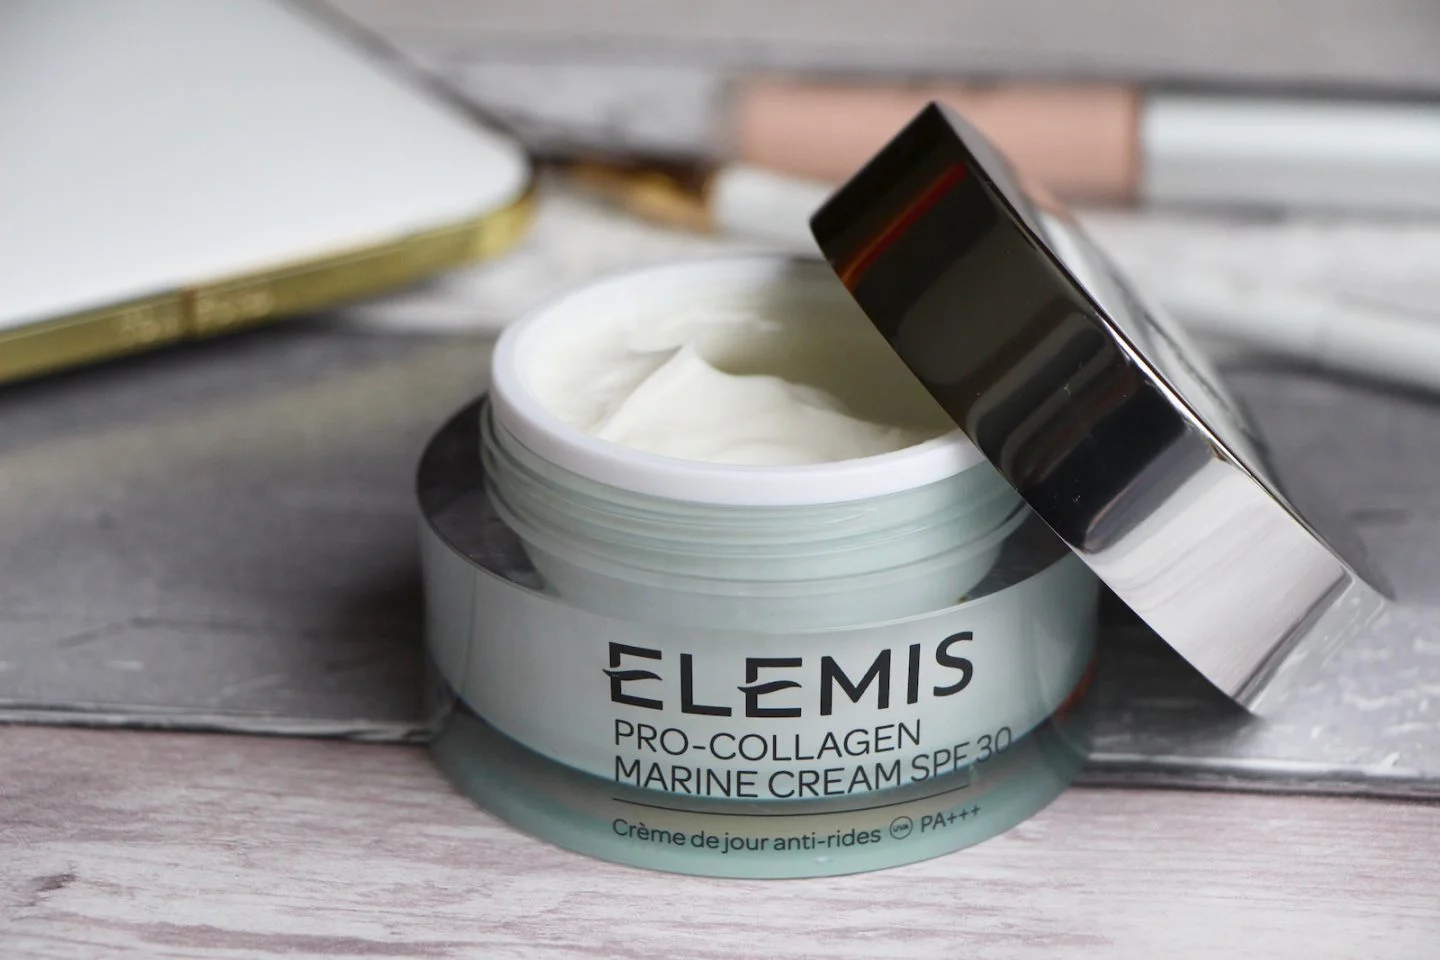 Elemis Pro-Collagen Marine Cream SPF30 review